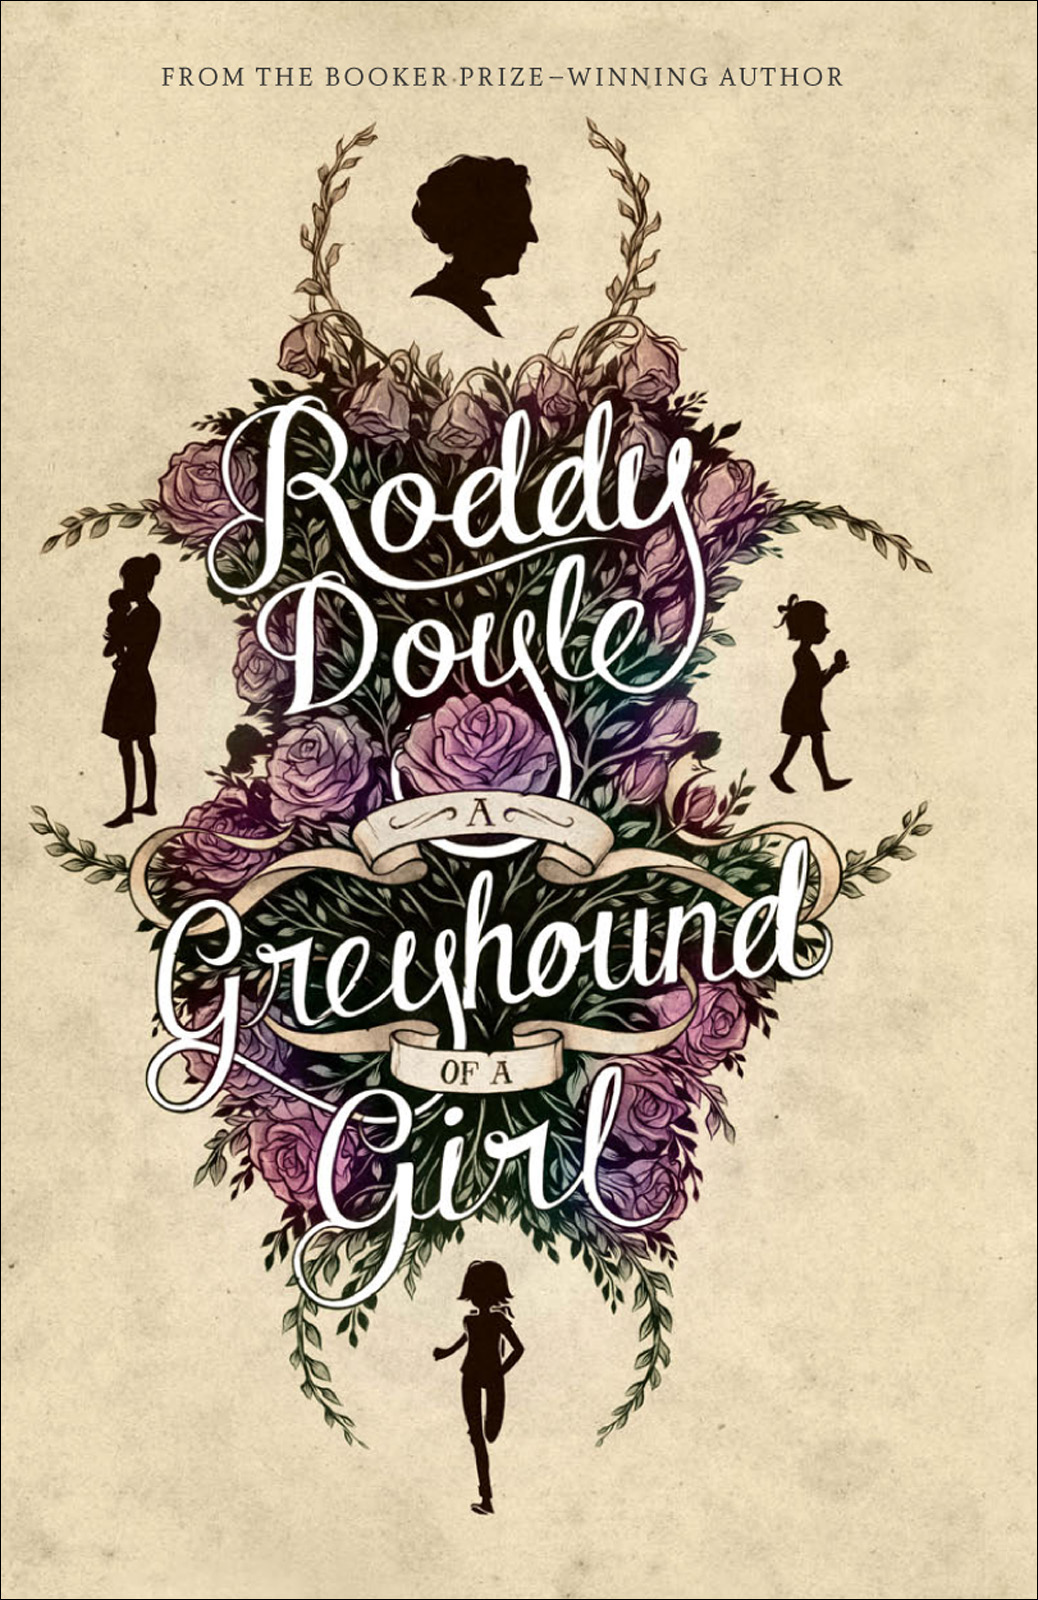 A Greyhound of a Girl (2012) by Roddy Doyle